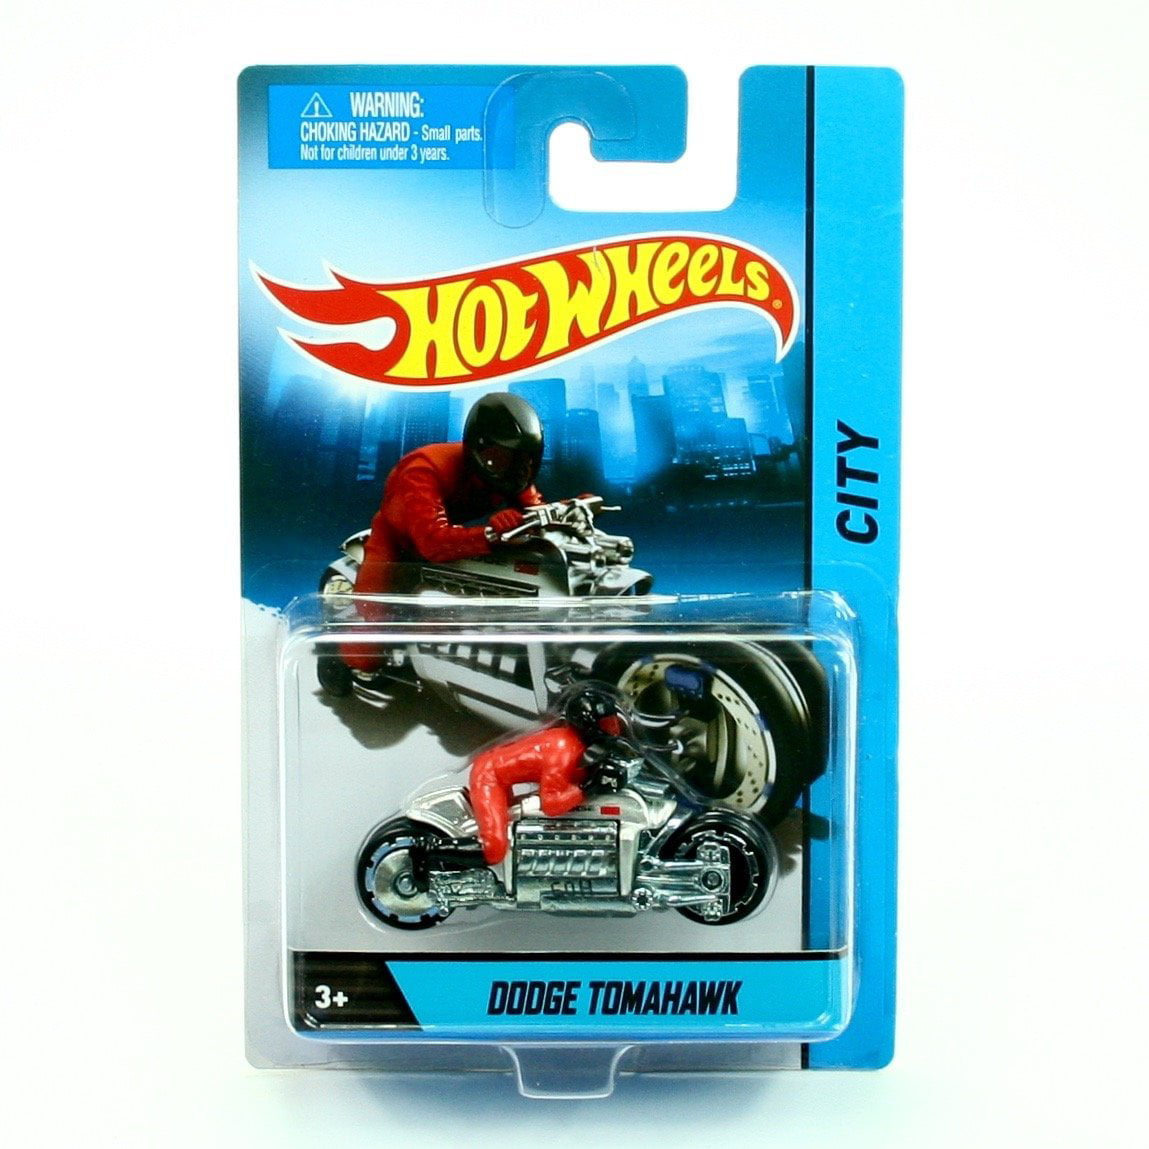 hot wheels motorcycle walmart